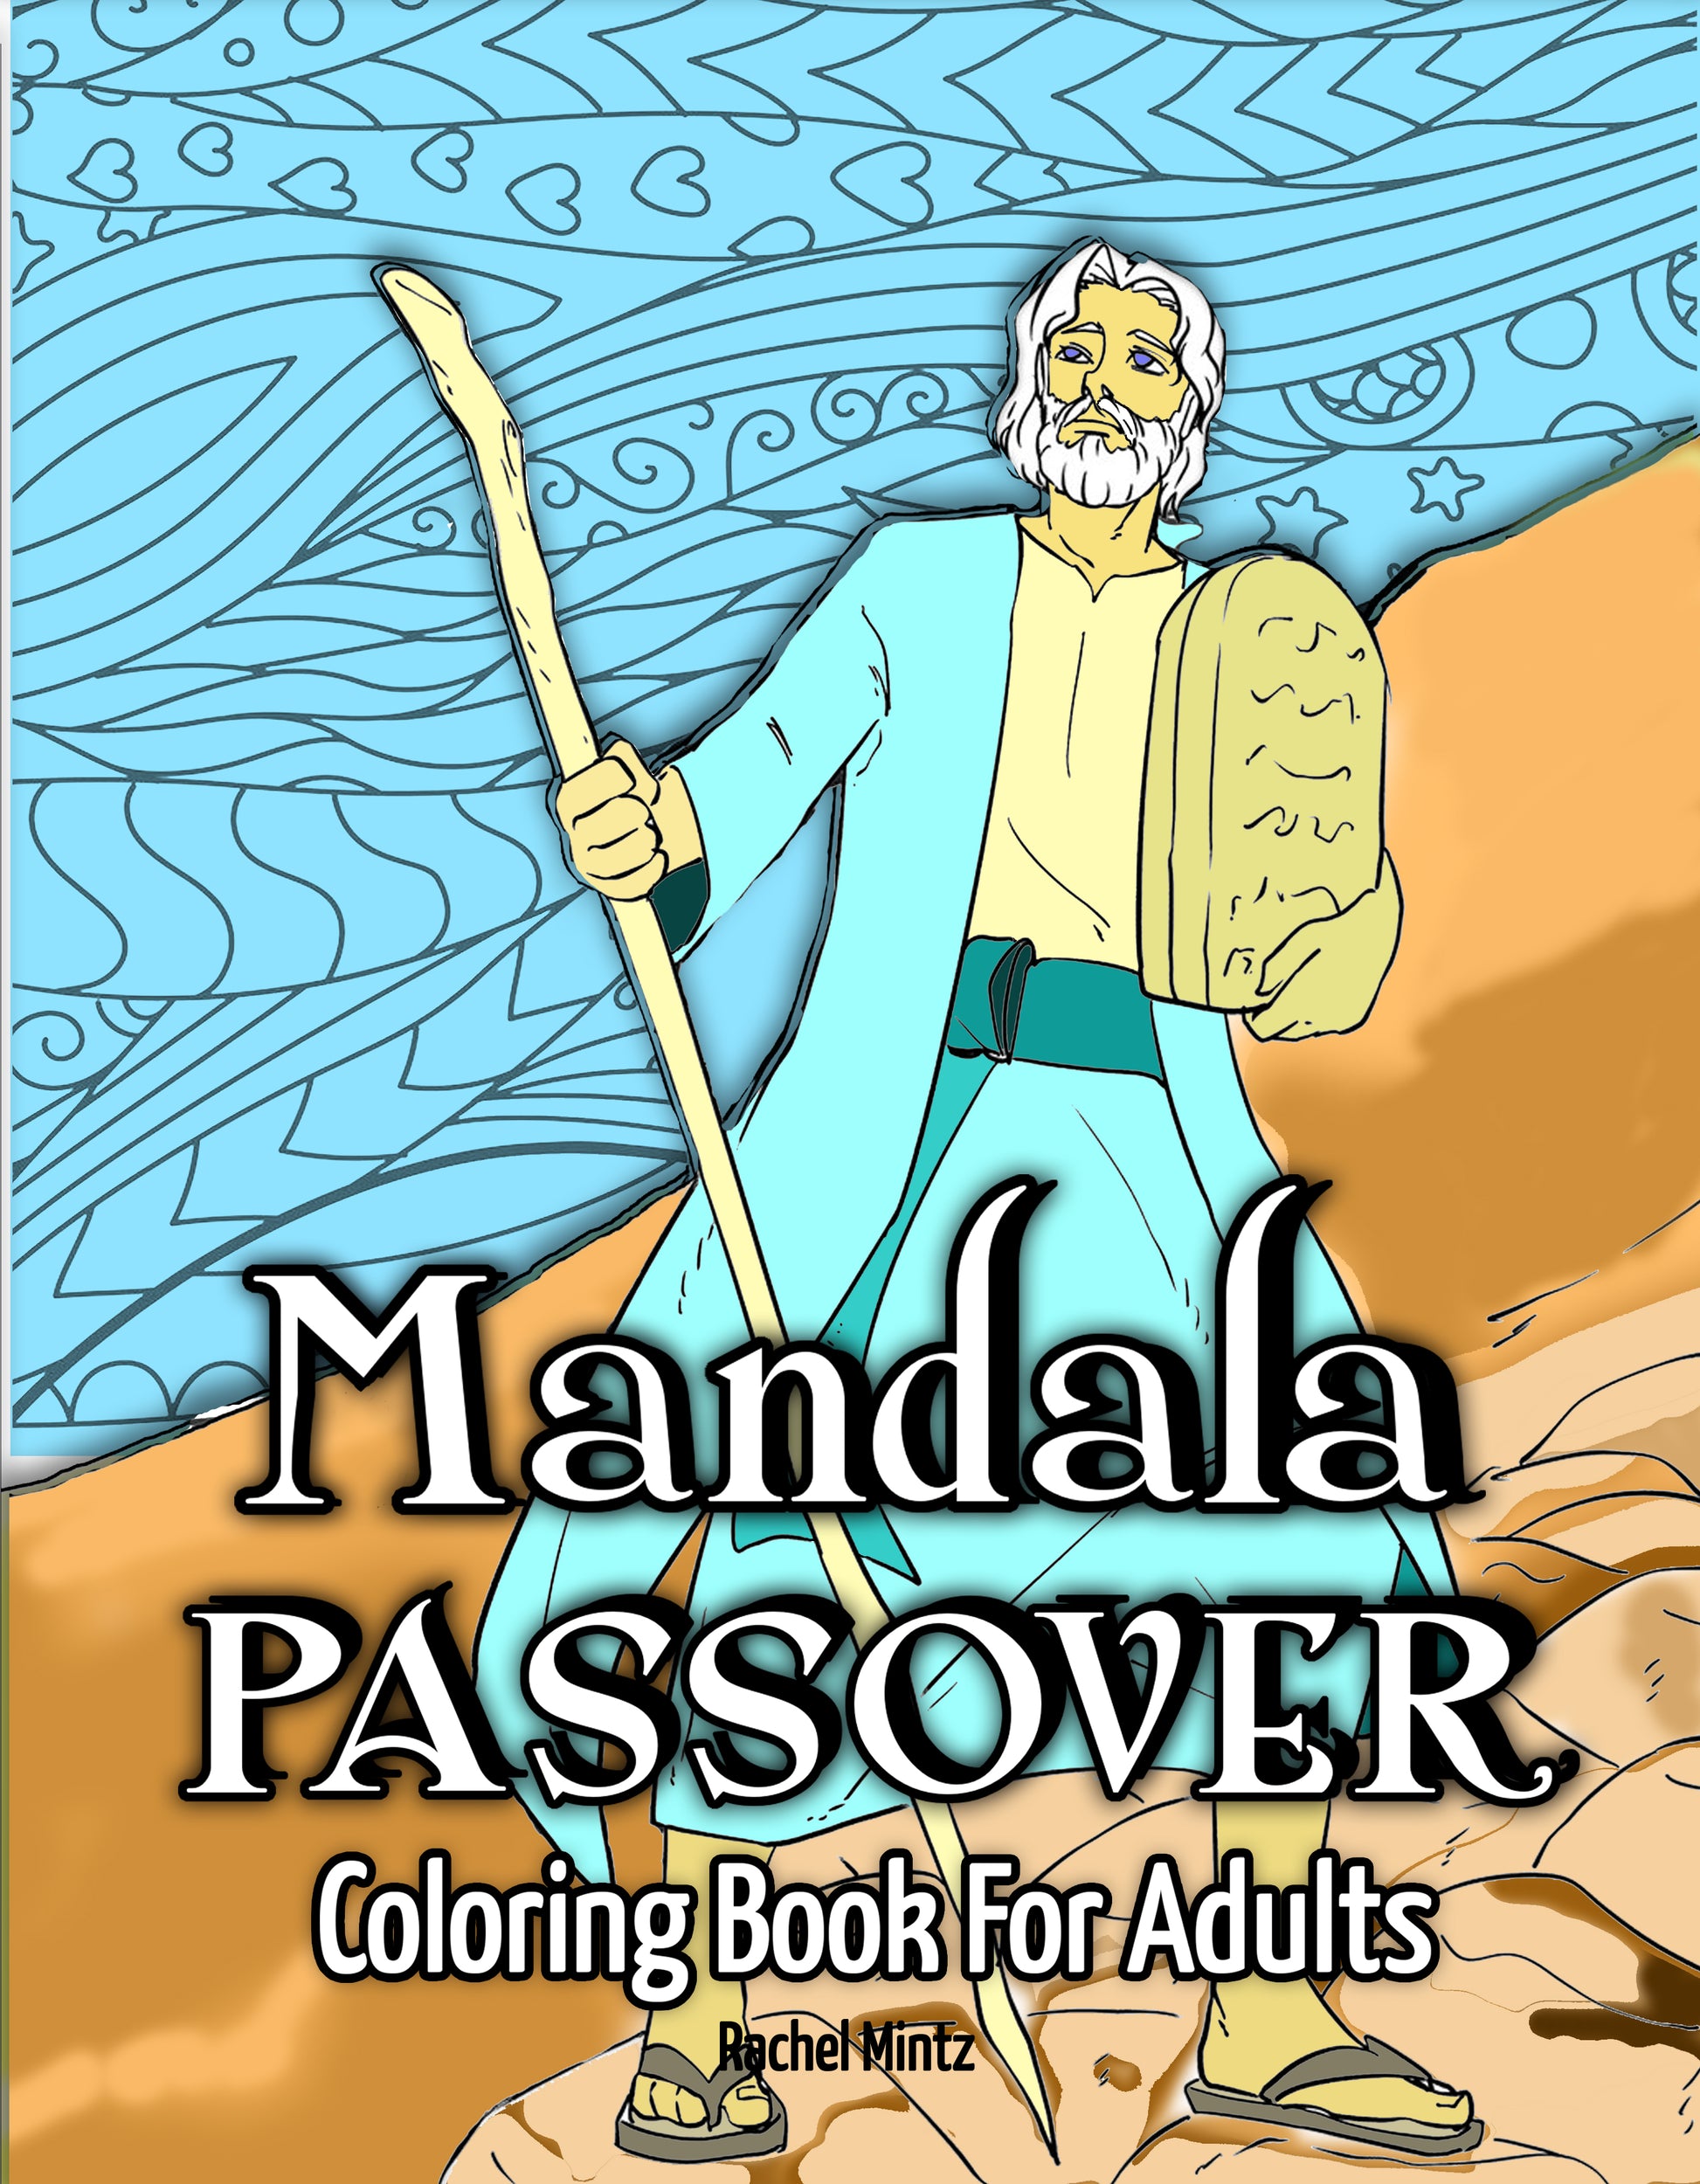 Mandala passover coloring book for adults â rachel mintz coloring books